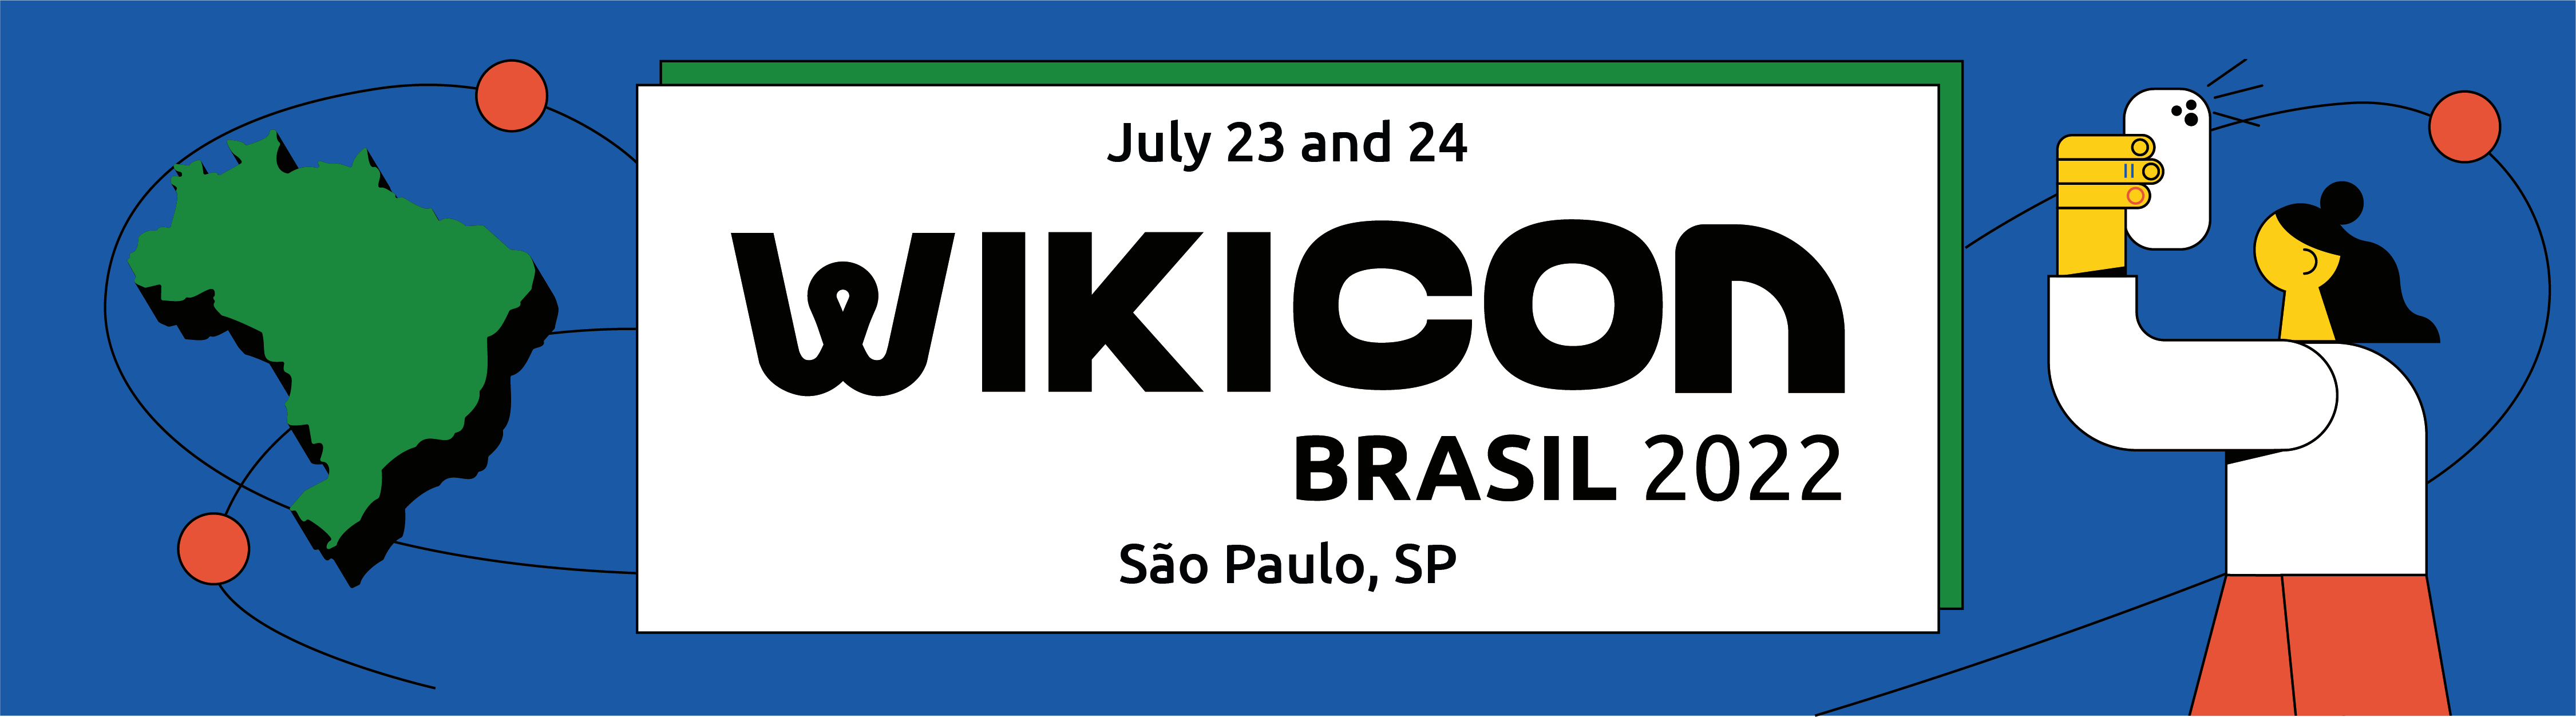 WikiCon Brasil 2022 - Banner horizontal en.png